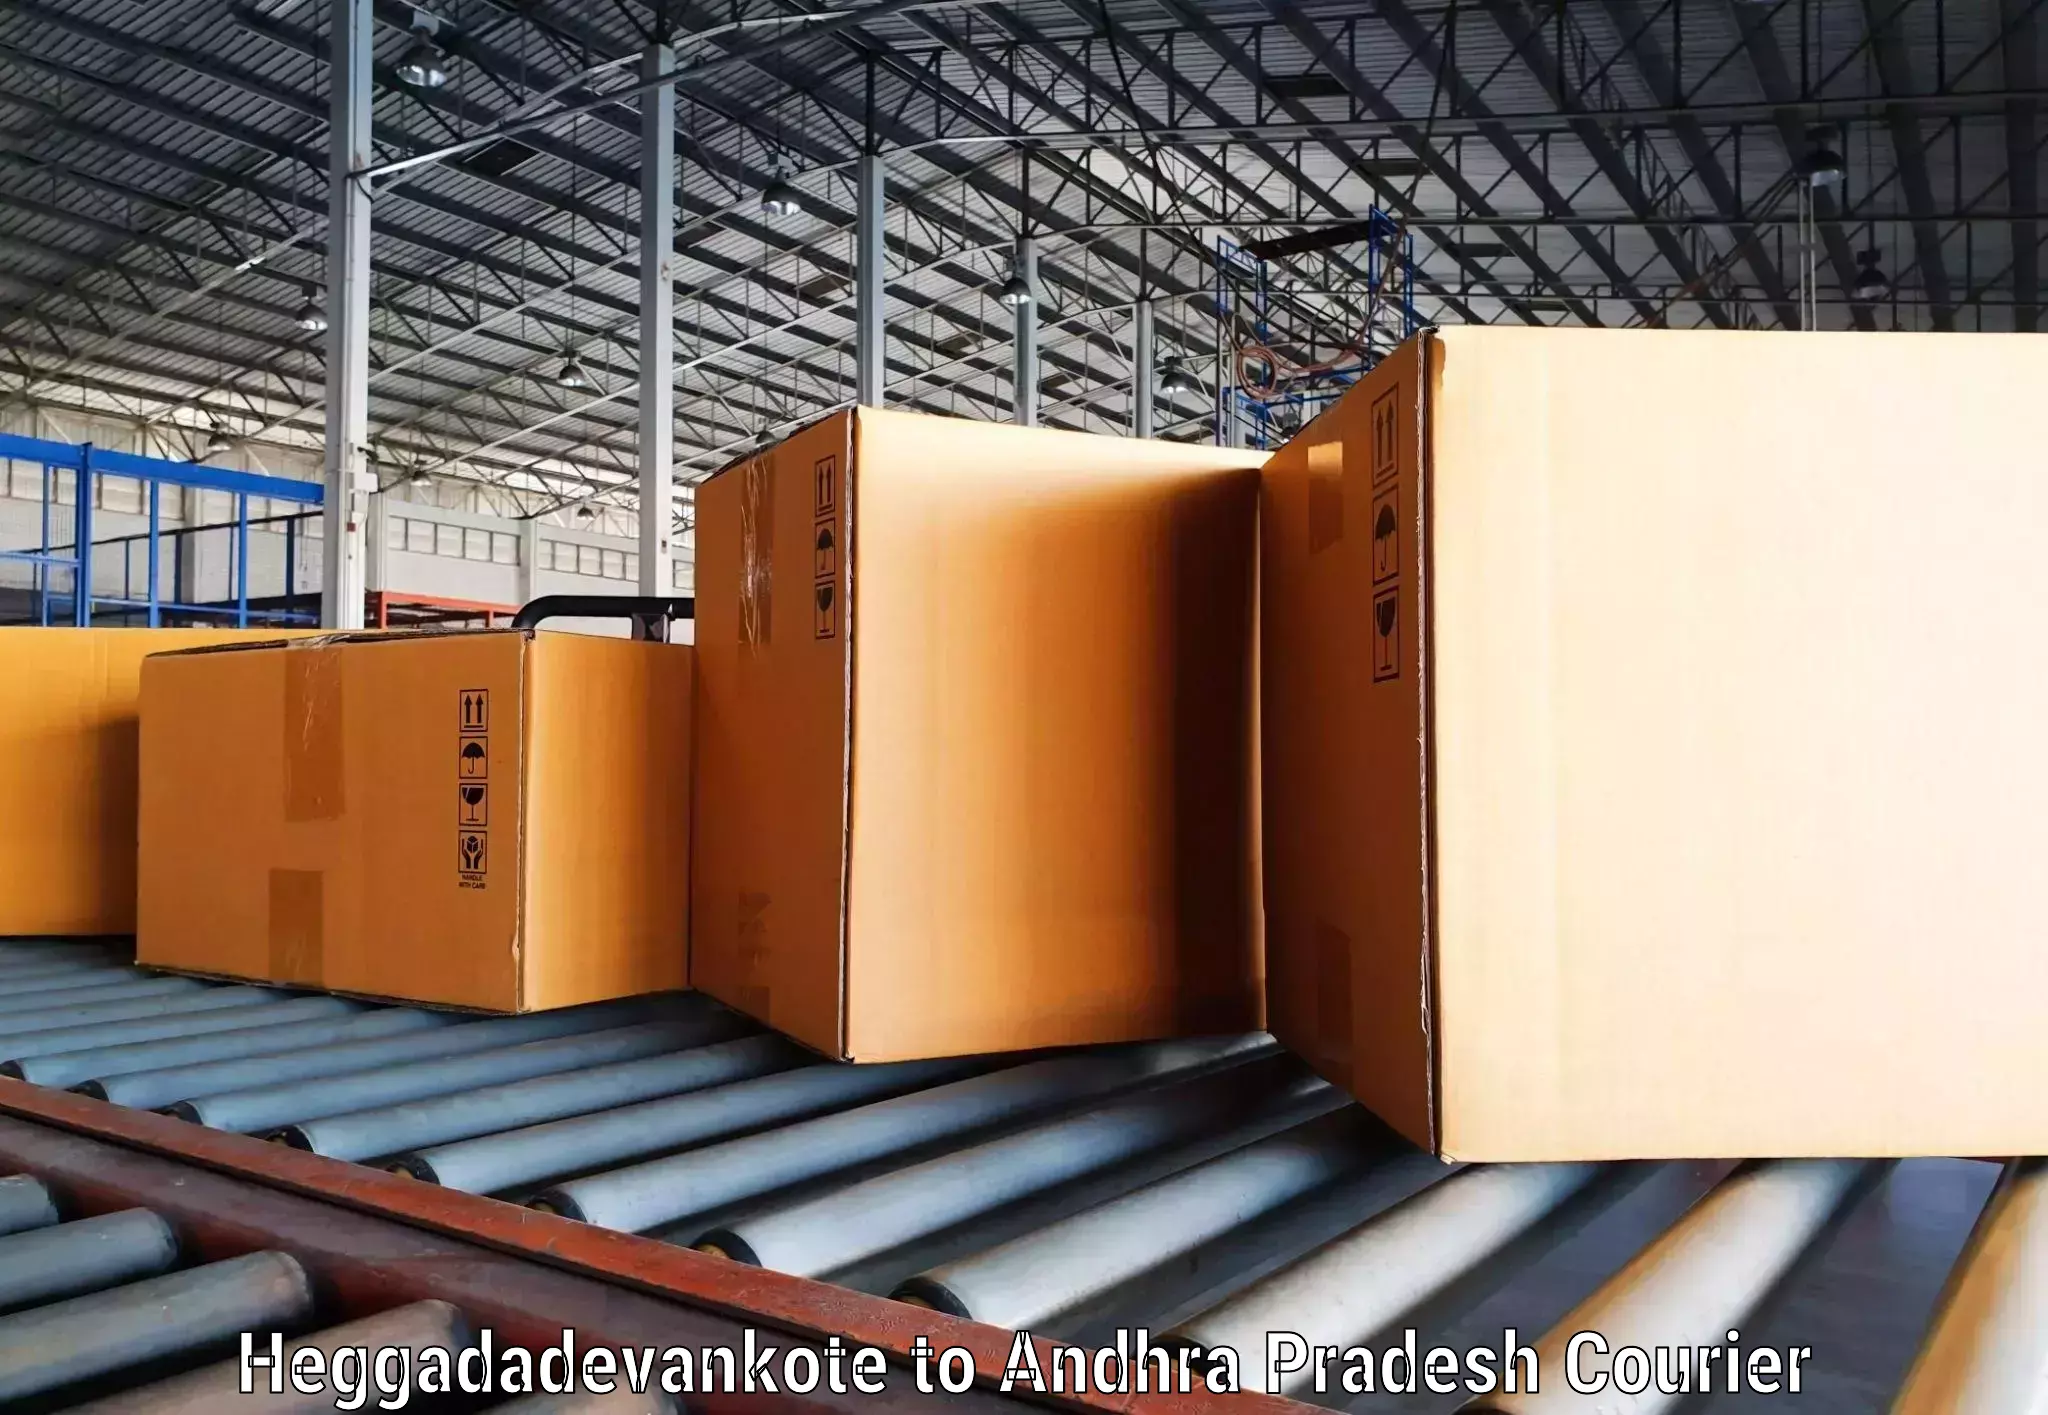 State-of-the-art courier technology Heggadadevankote to Kondapi